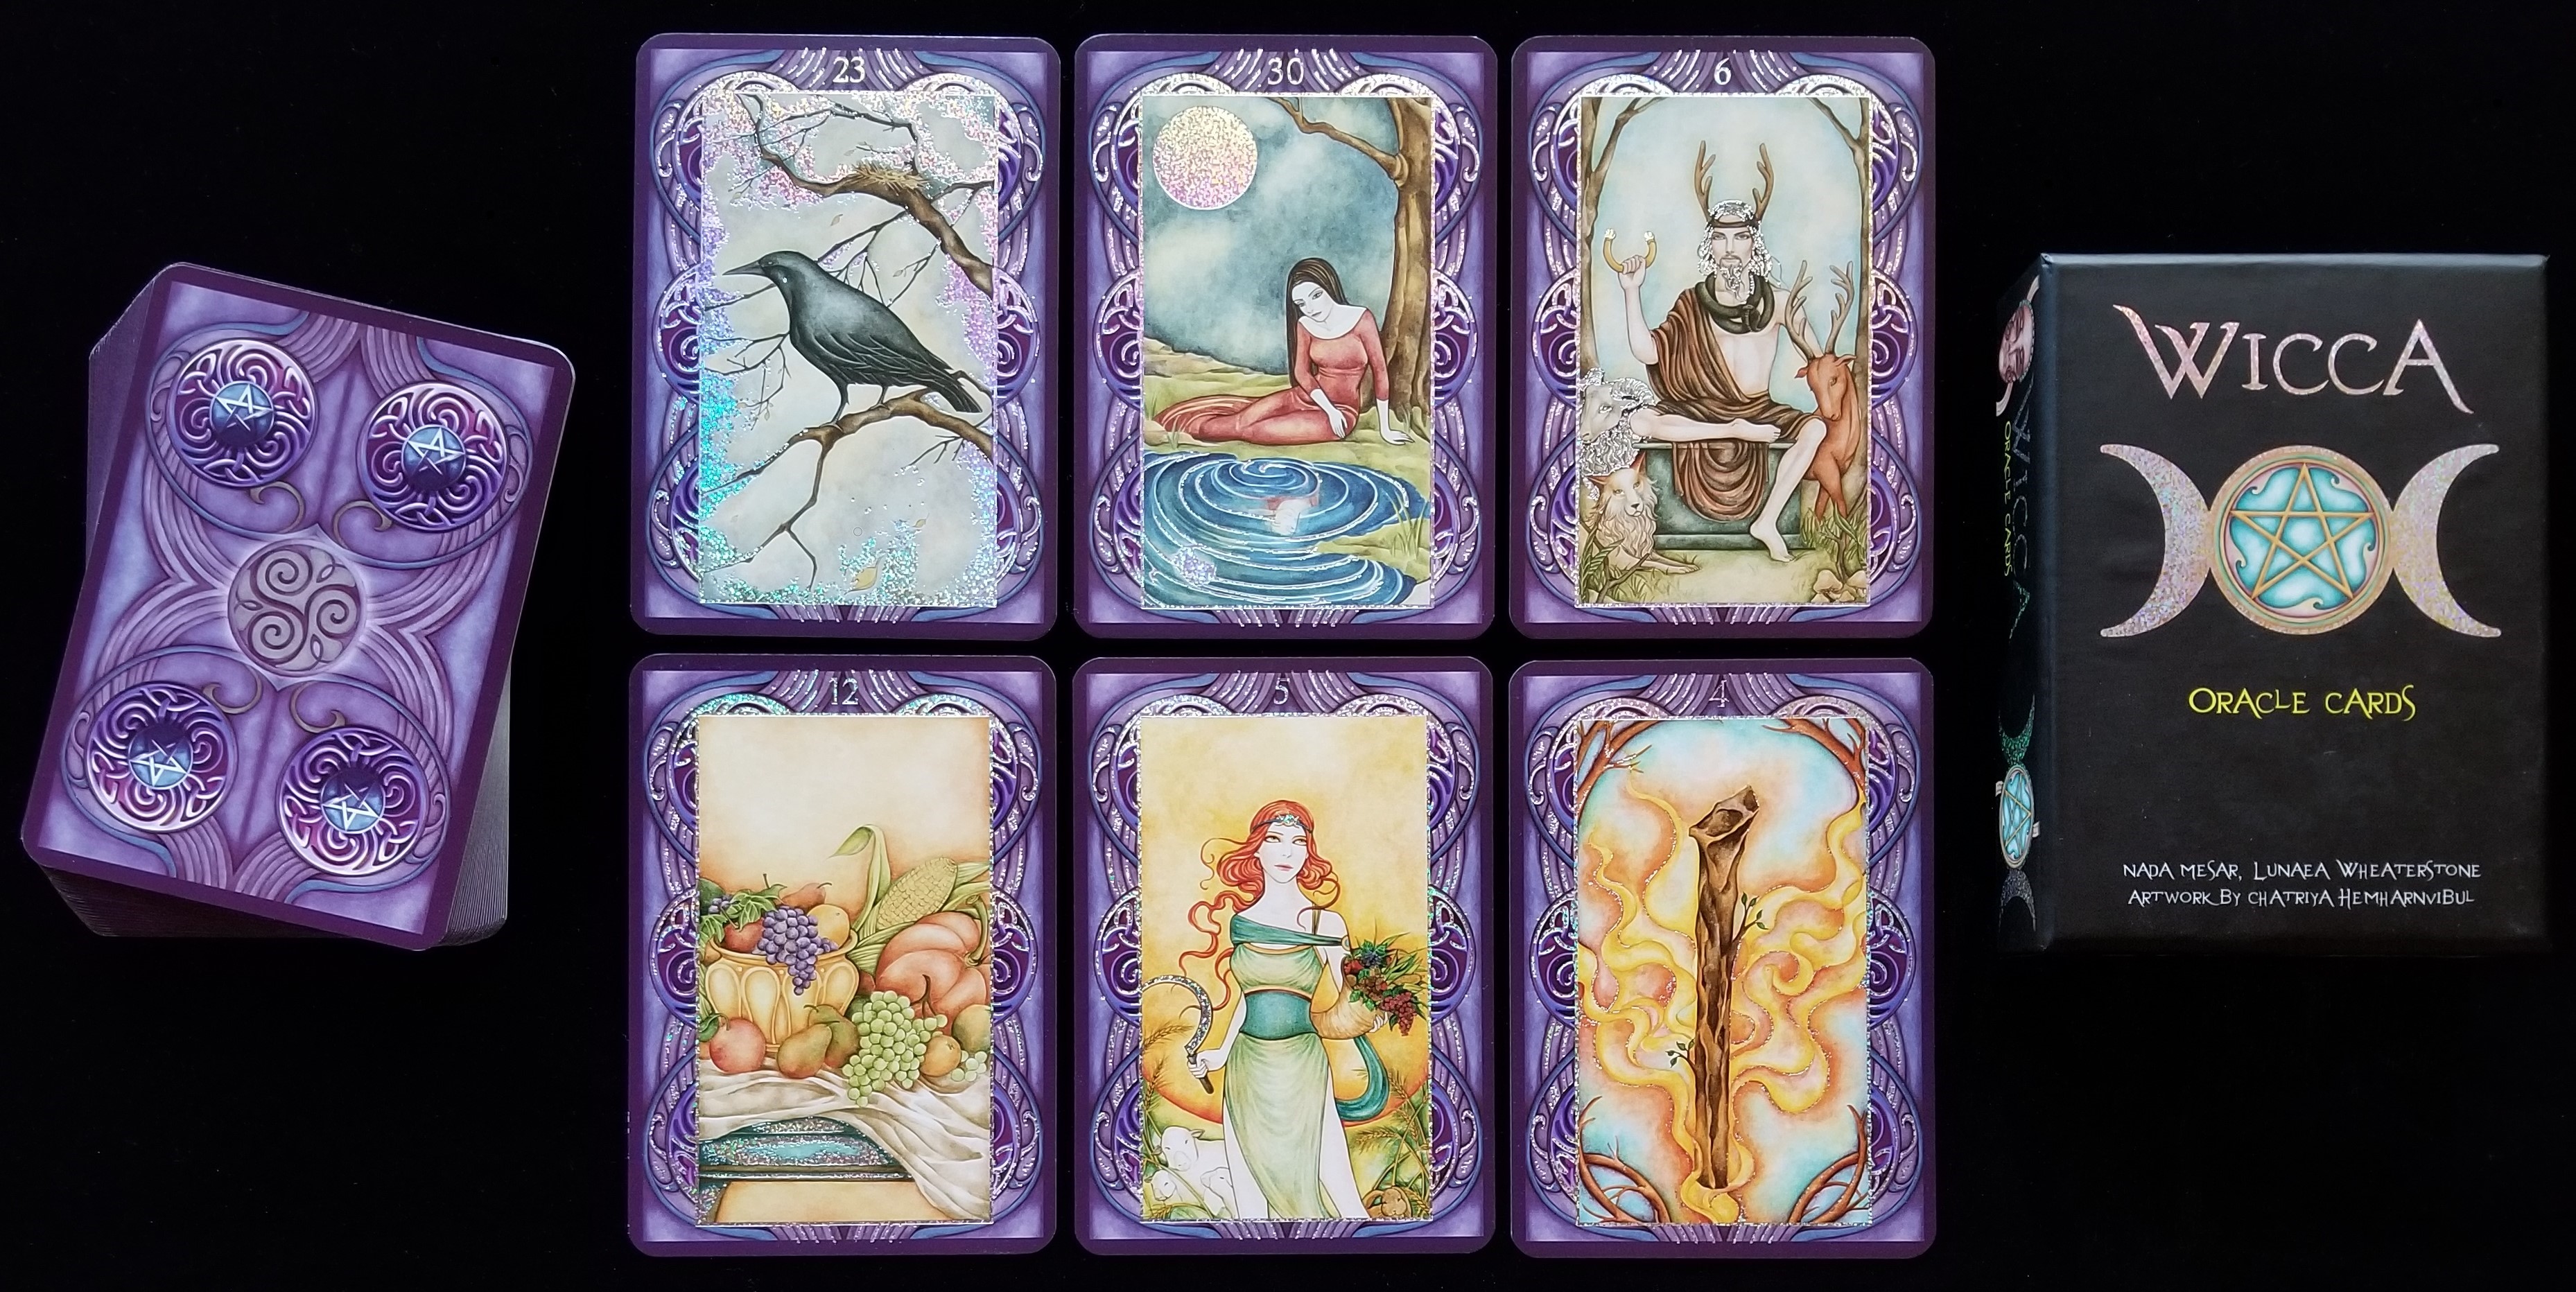 Оракул Викка Wicca Cards